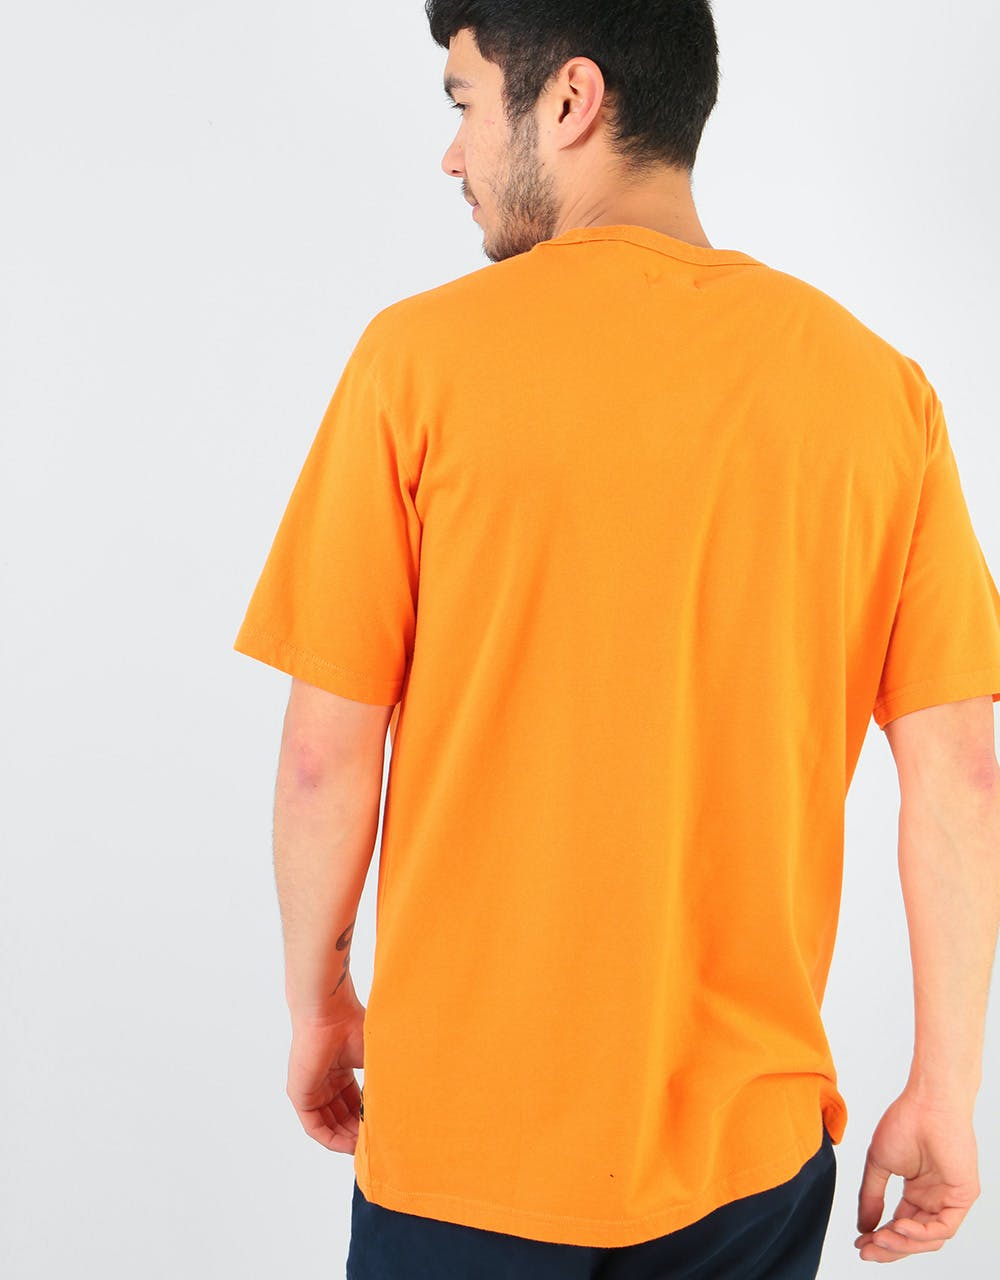 Levi's Skateboarding Batwing T-Shirt - Orange